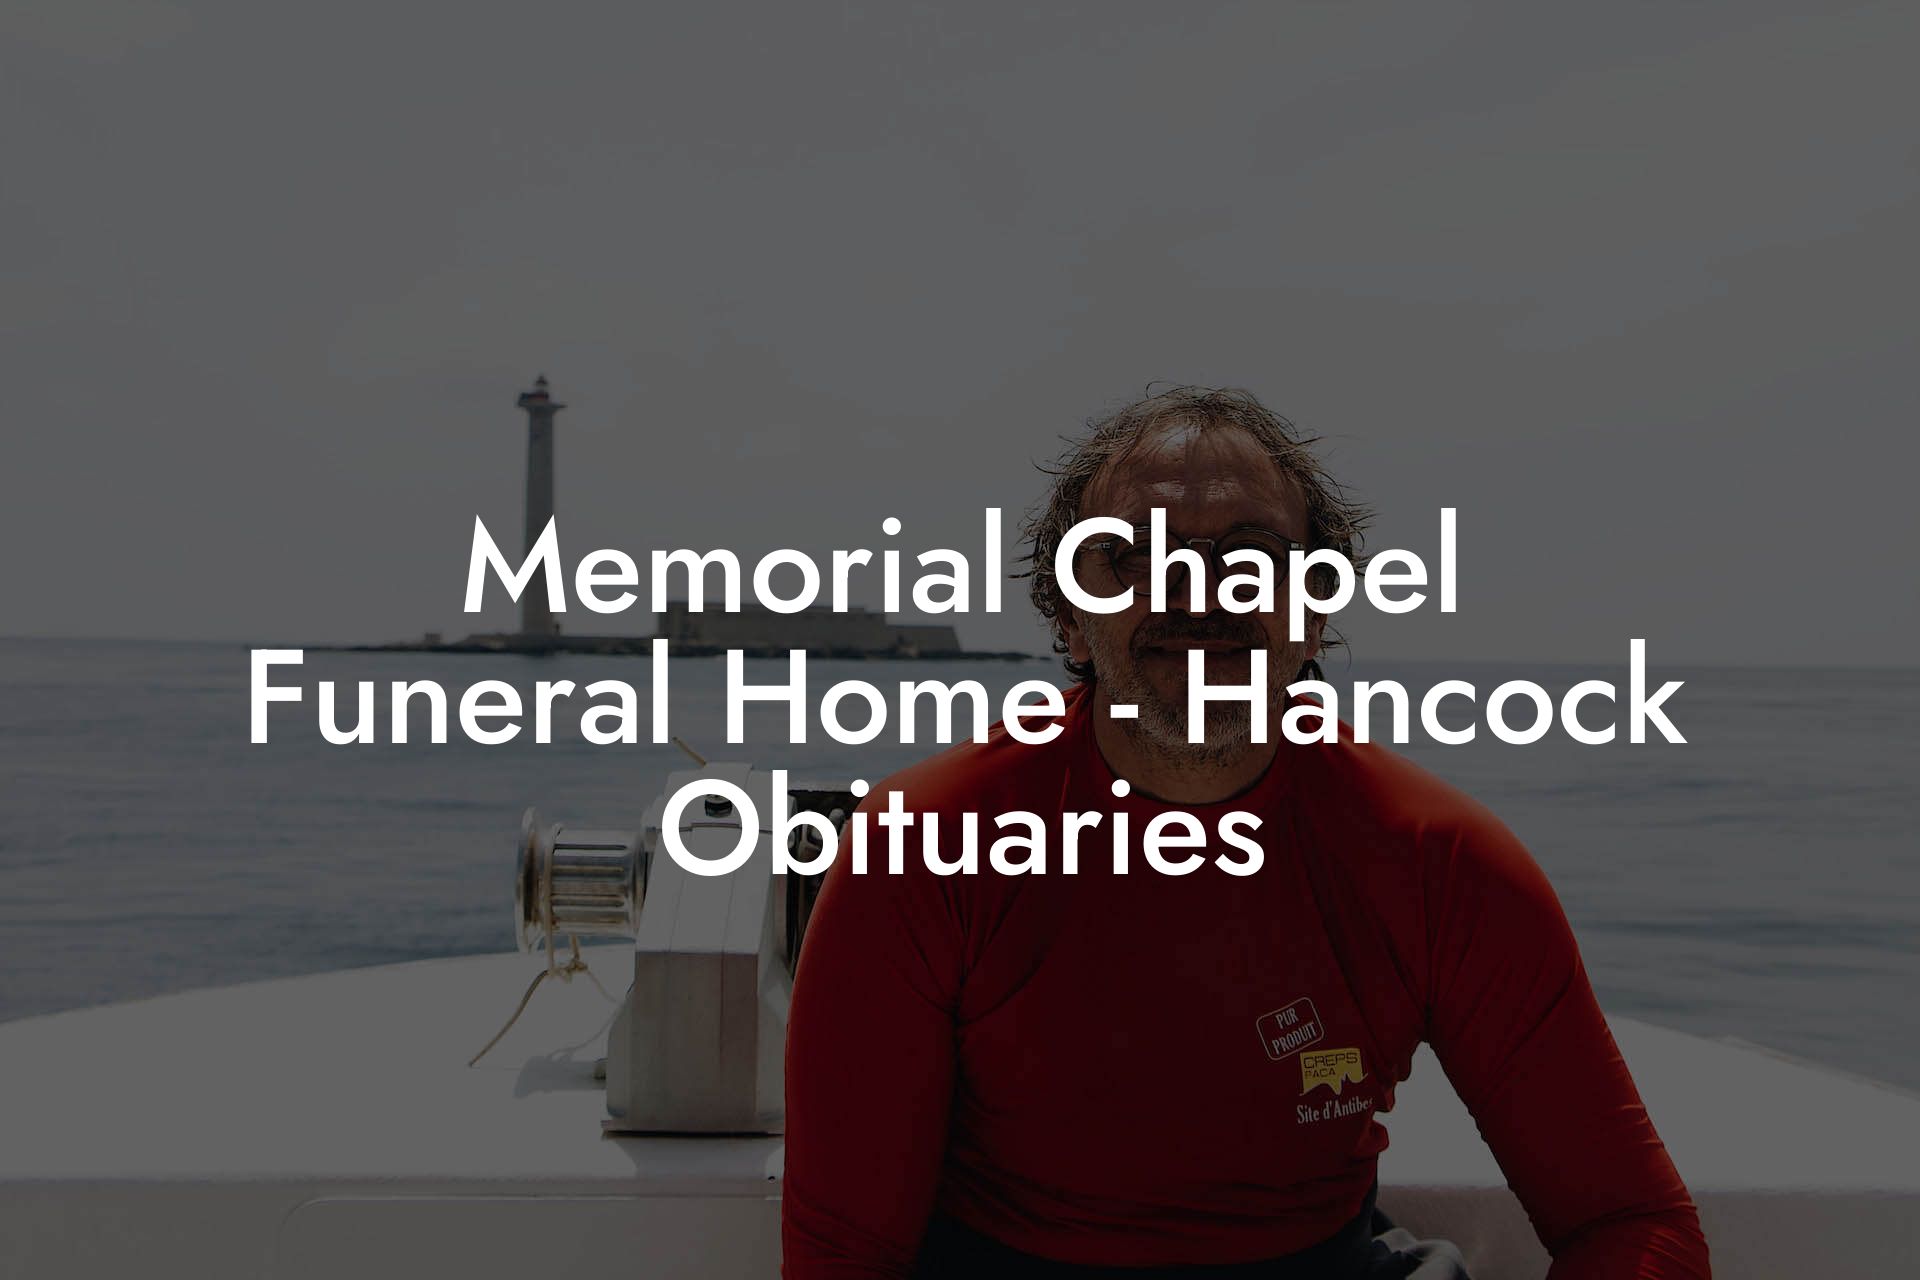 Memorial Chapel Funeral Home - Hancock Obituaries